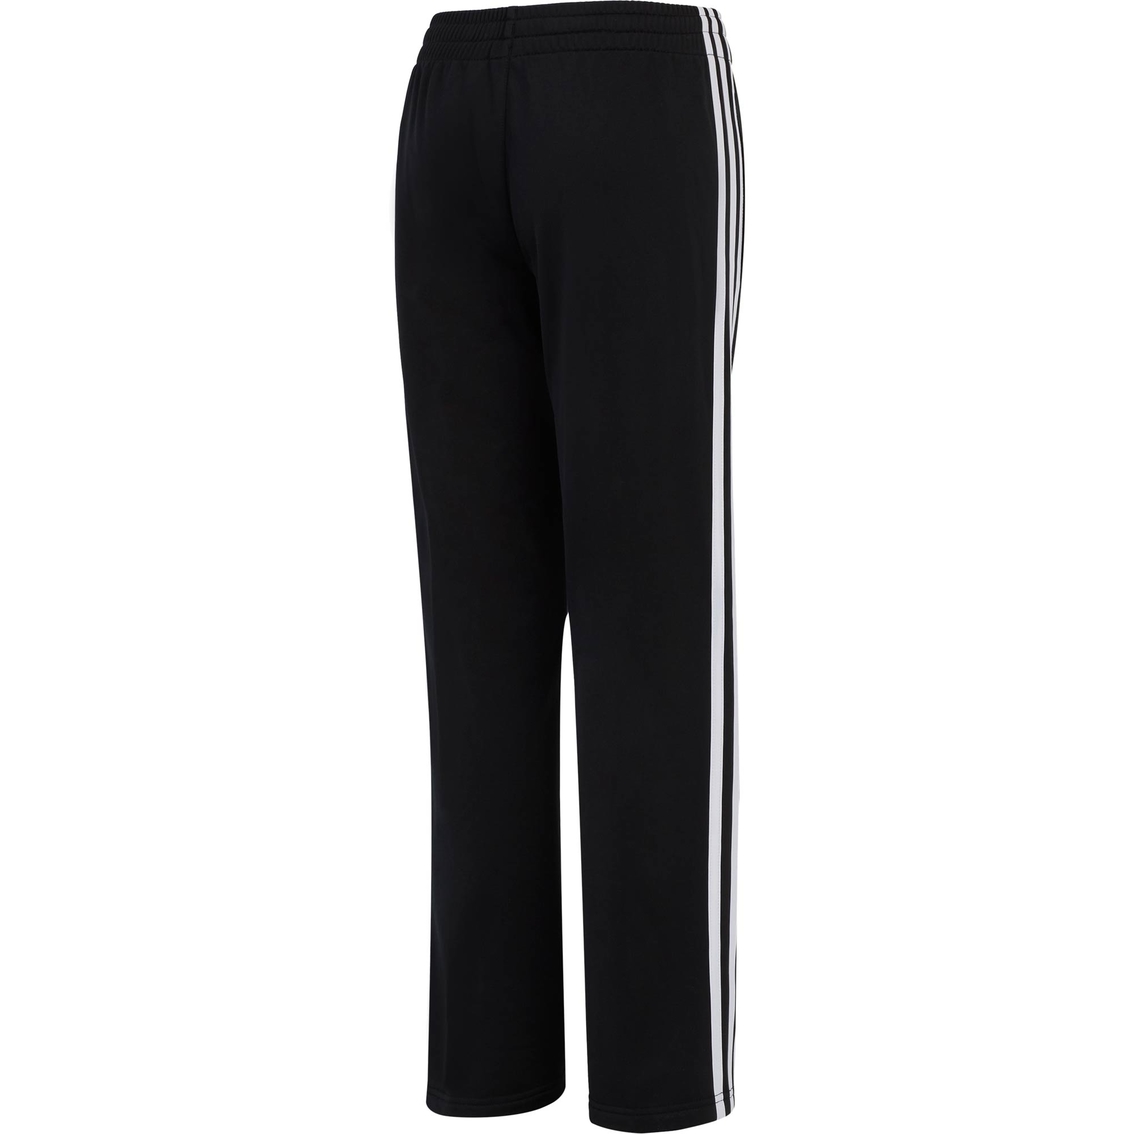 Adidas Little Boys Iconic Tricot Pants | Boys 4-7x | Clothing ...